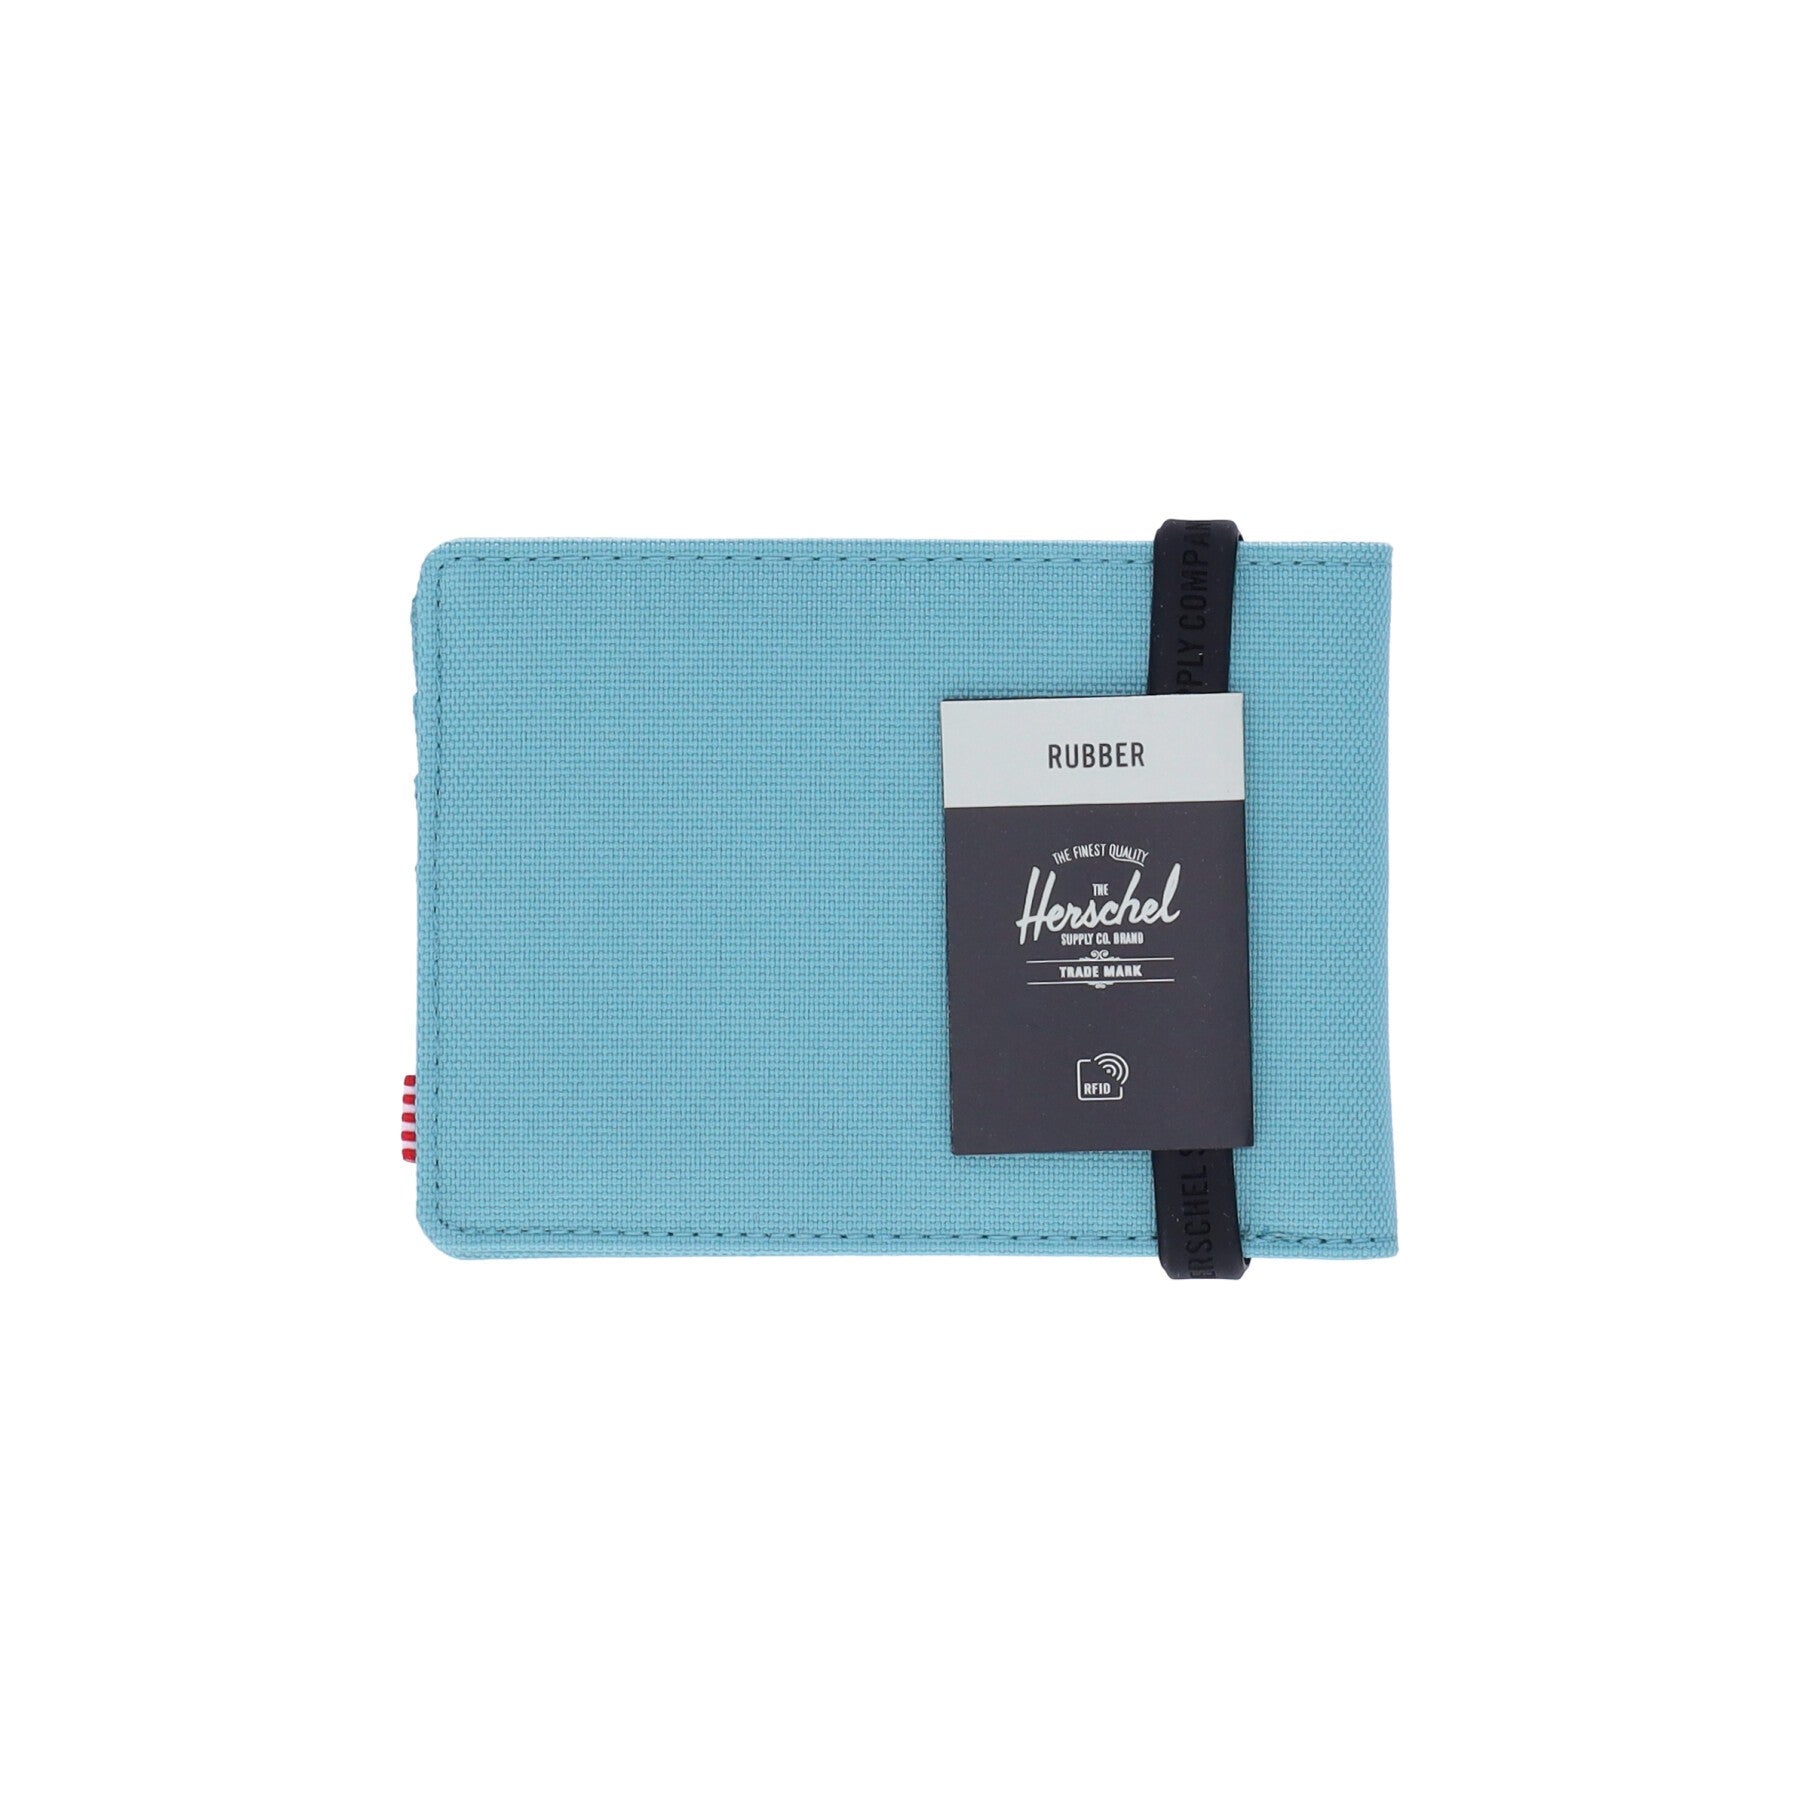 Roy Rubber Rfid Men's Wallet Neon Blue